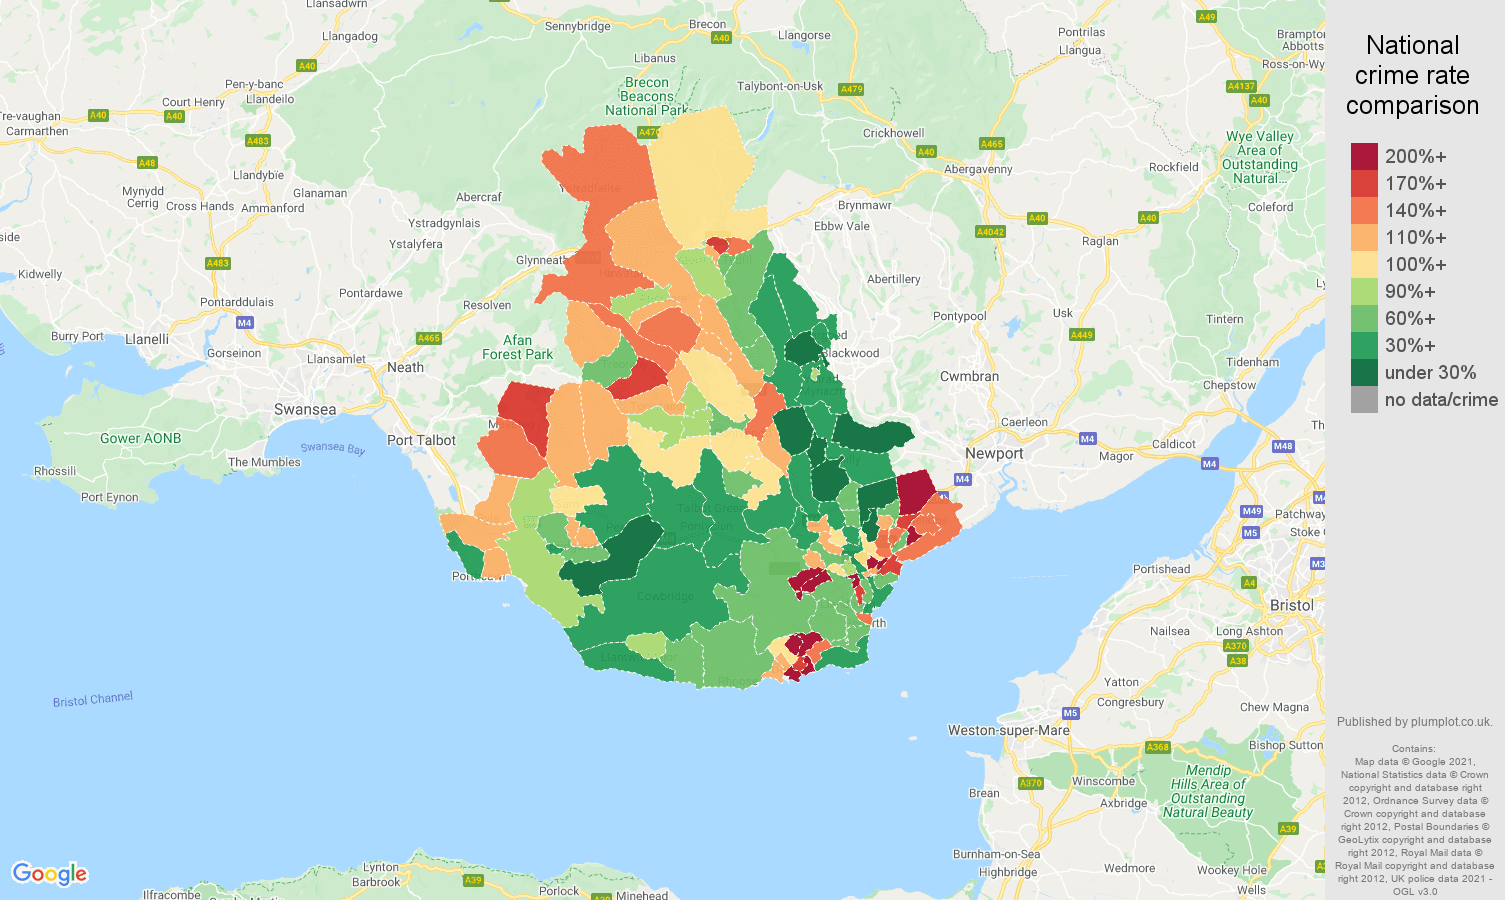 Cardiff criminal damage and arson crime rate comparison map